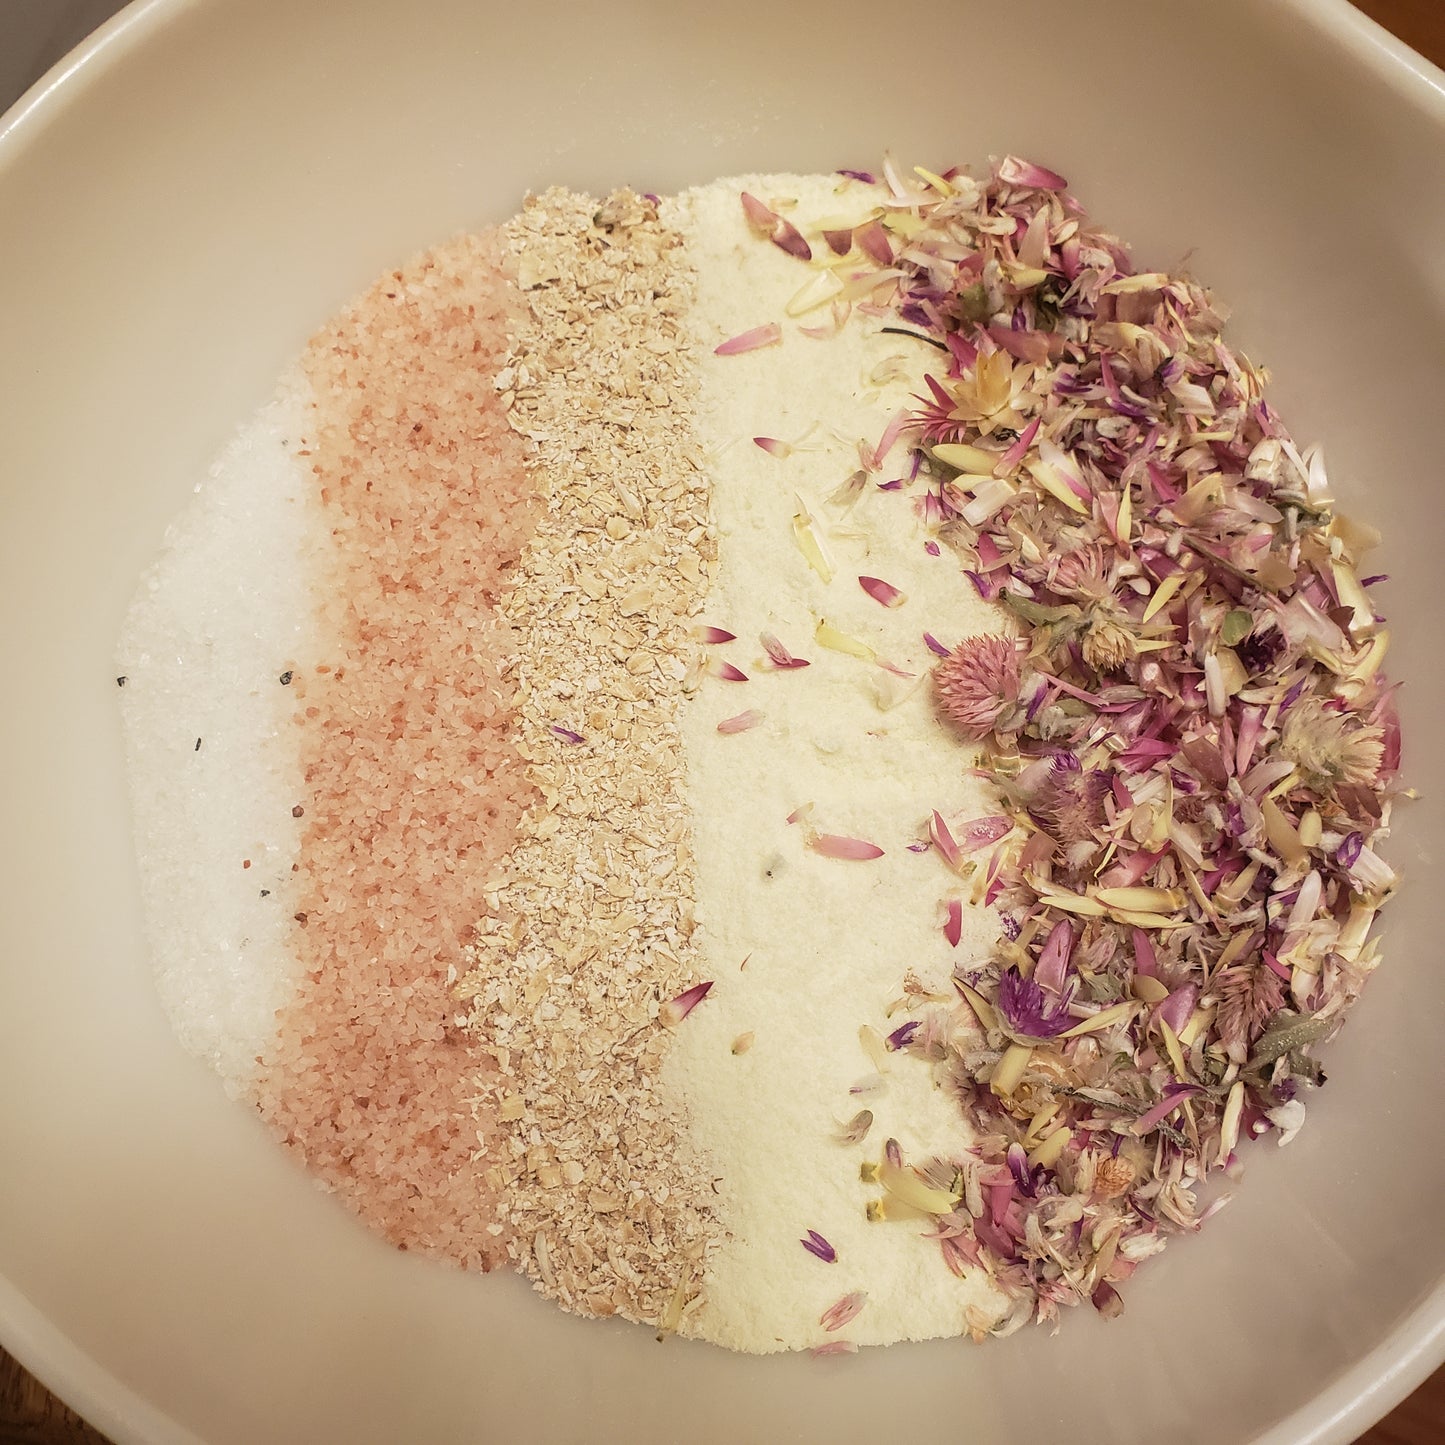 8oz Herbal Milk Bath/Epsom Salt Soak with Organic Flowers